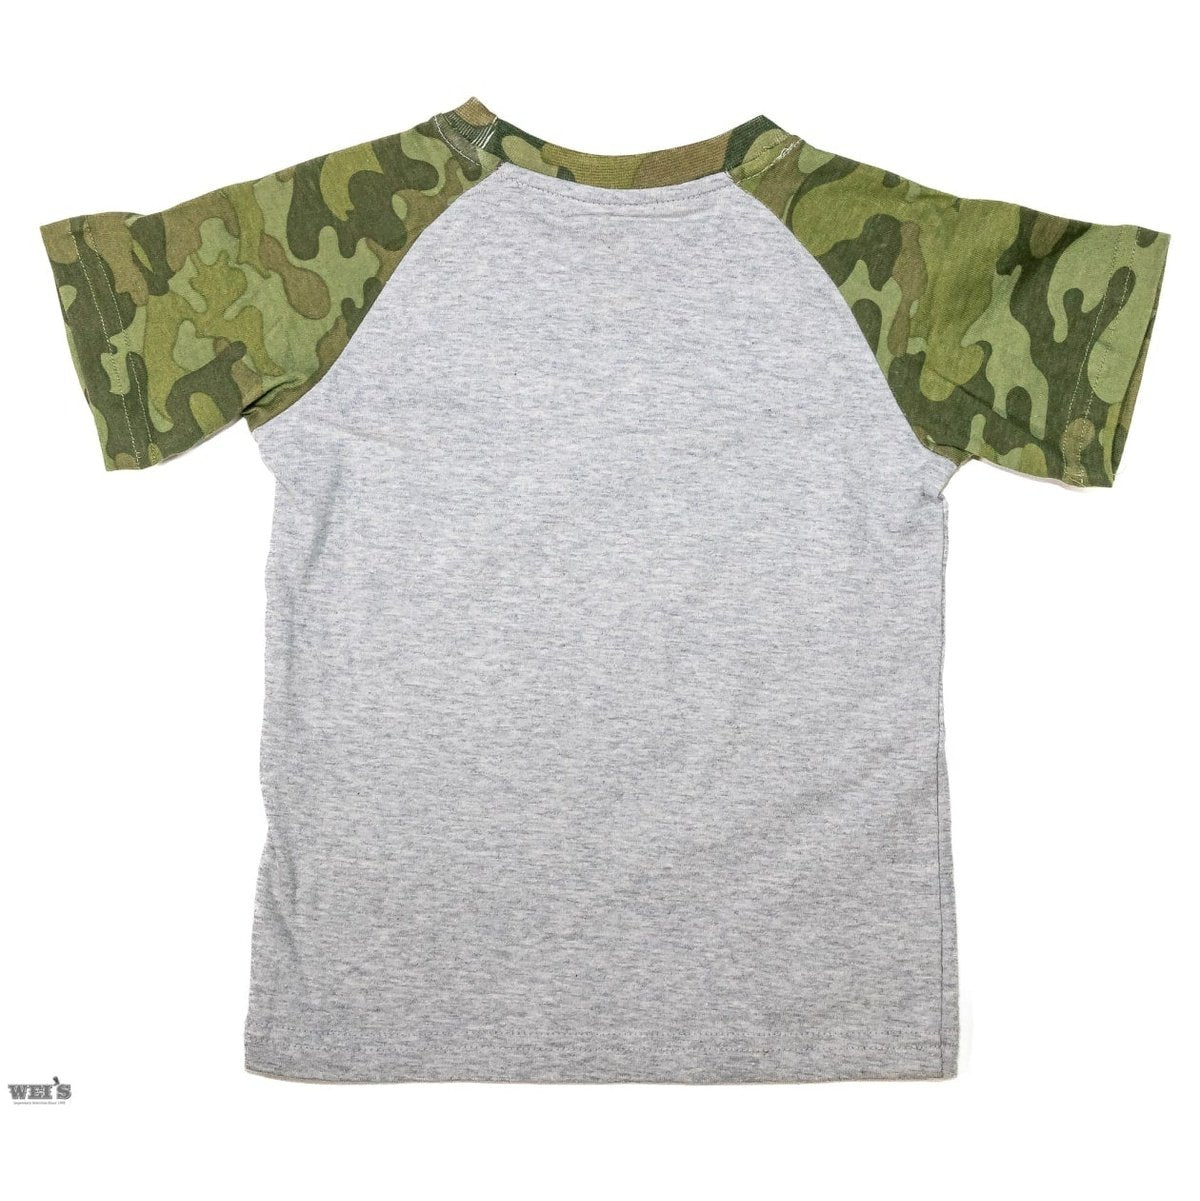 John Deere Boy’s Shirt Raglan Style with "Cuter in Camo" Graphic J3T316JC - John Deere